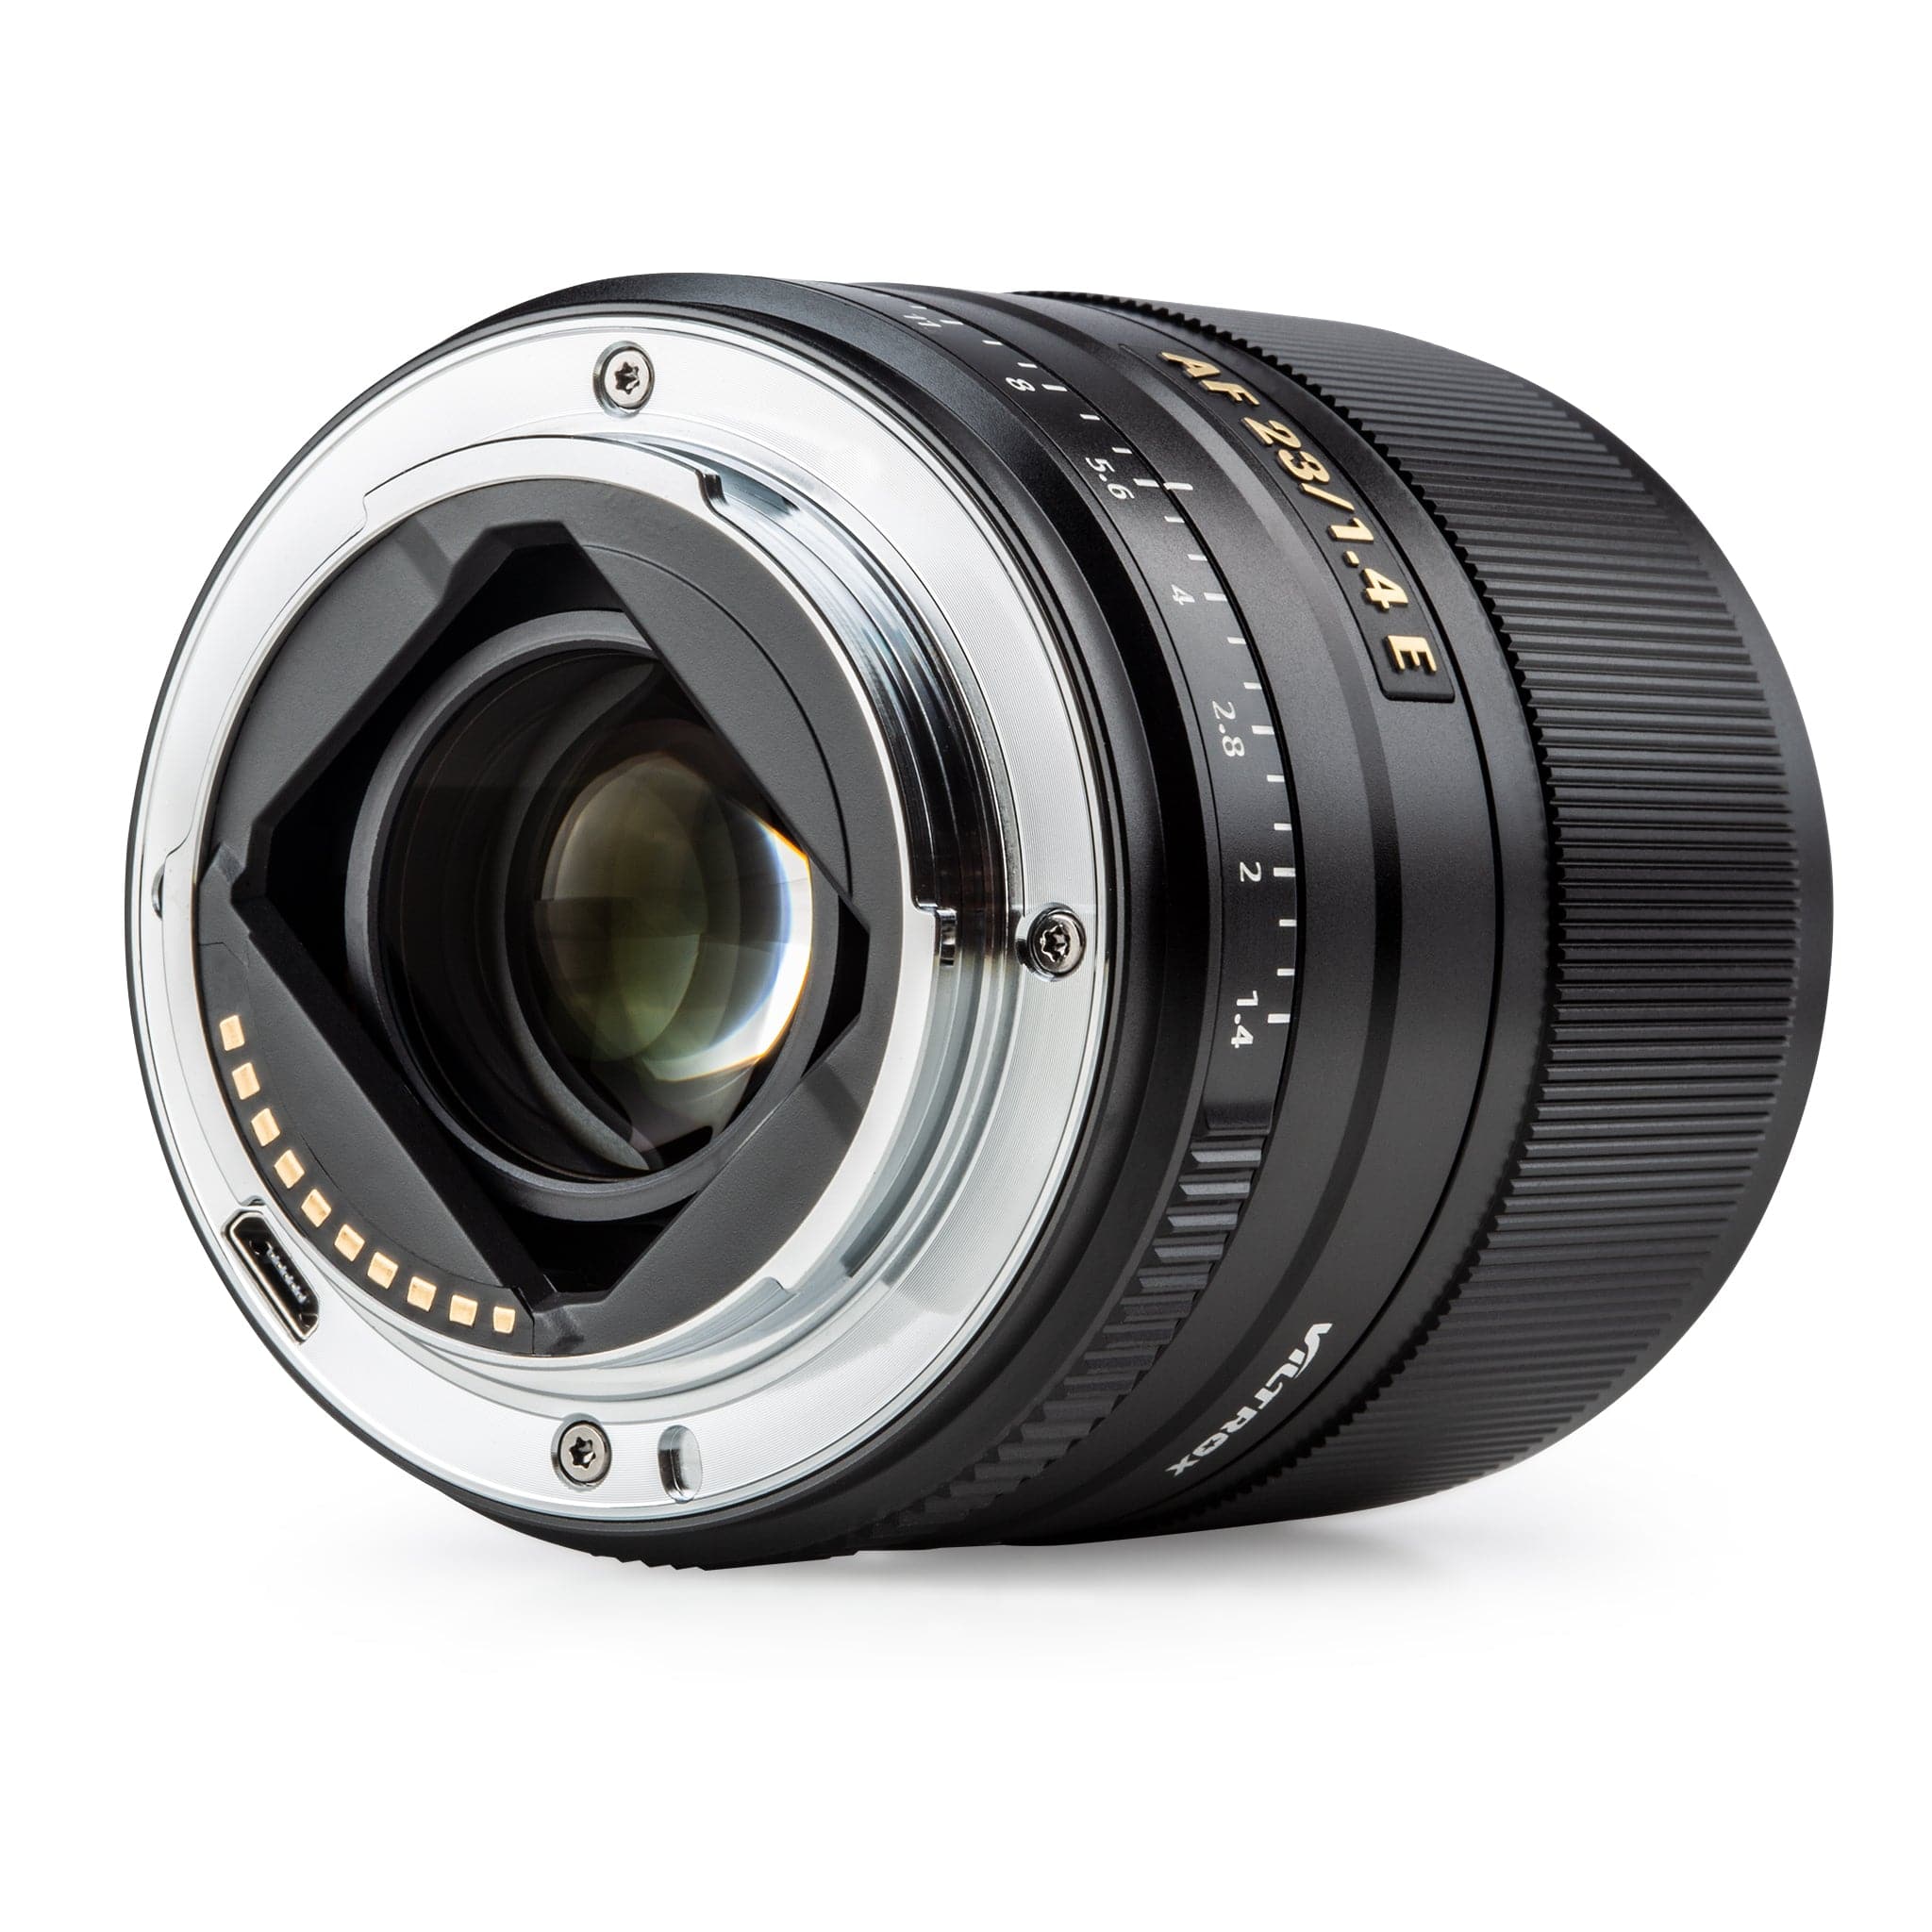 Viltrox 23mm f1.4 E Auto Focus APS-C Prime Lens for Sony E-mount Camera with Large Aperture